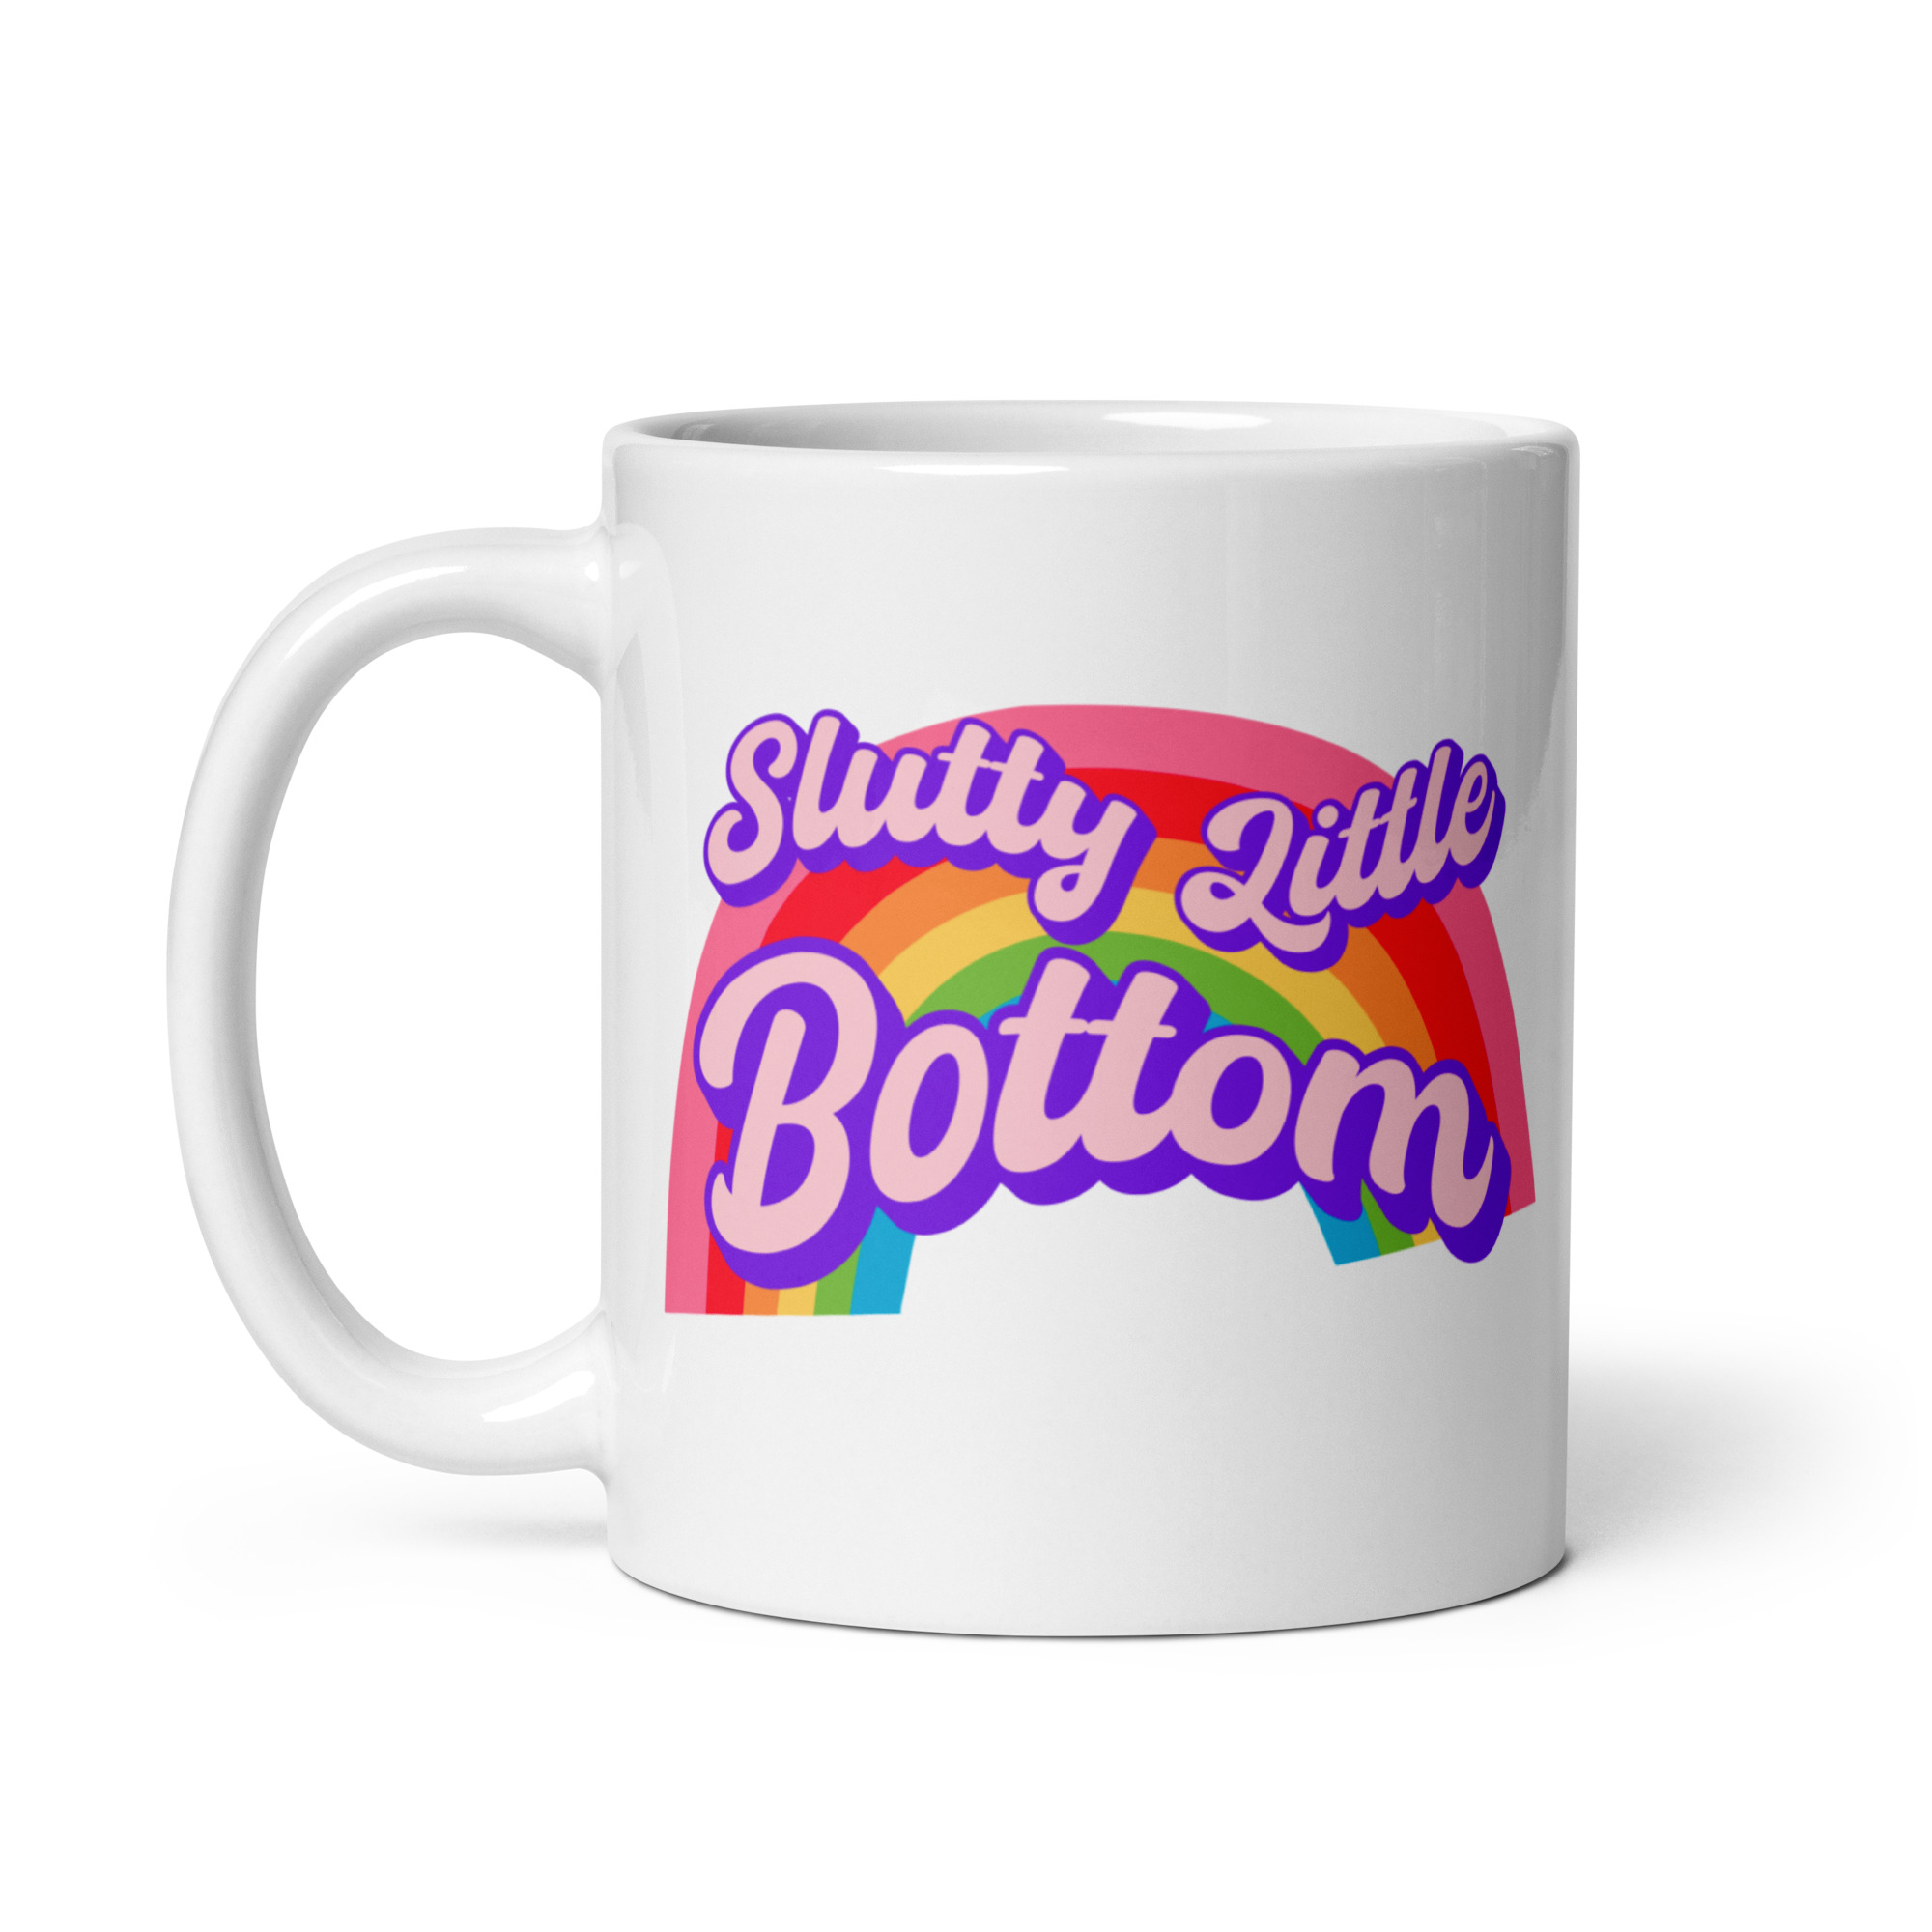 Featured image for “Slutty Little Bottom - White glossy mug”